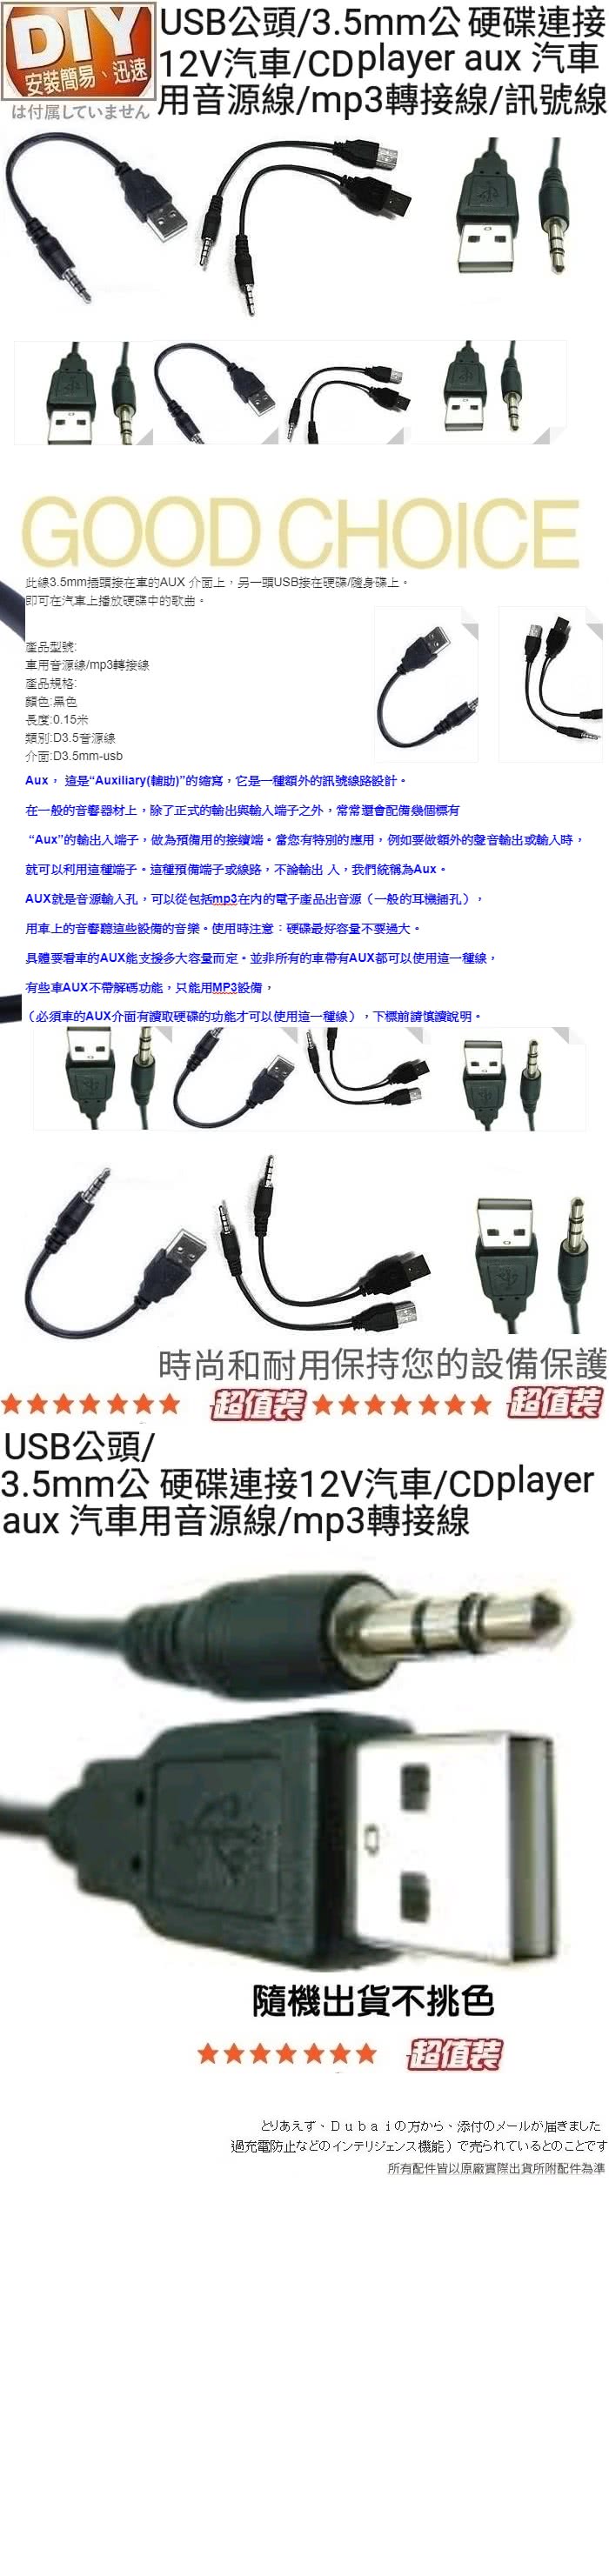 Ainmax 艾買氏 Usb公3 5mm公硬碟連接12v汽車cd Player Aux 汽車用音源線mp3轉接線訊號線 Momo購物網